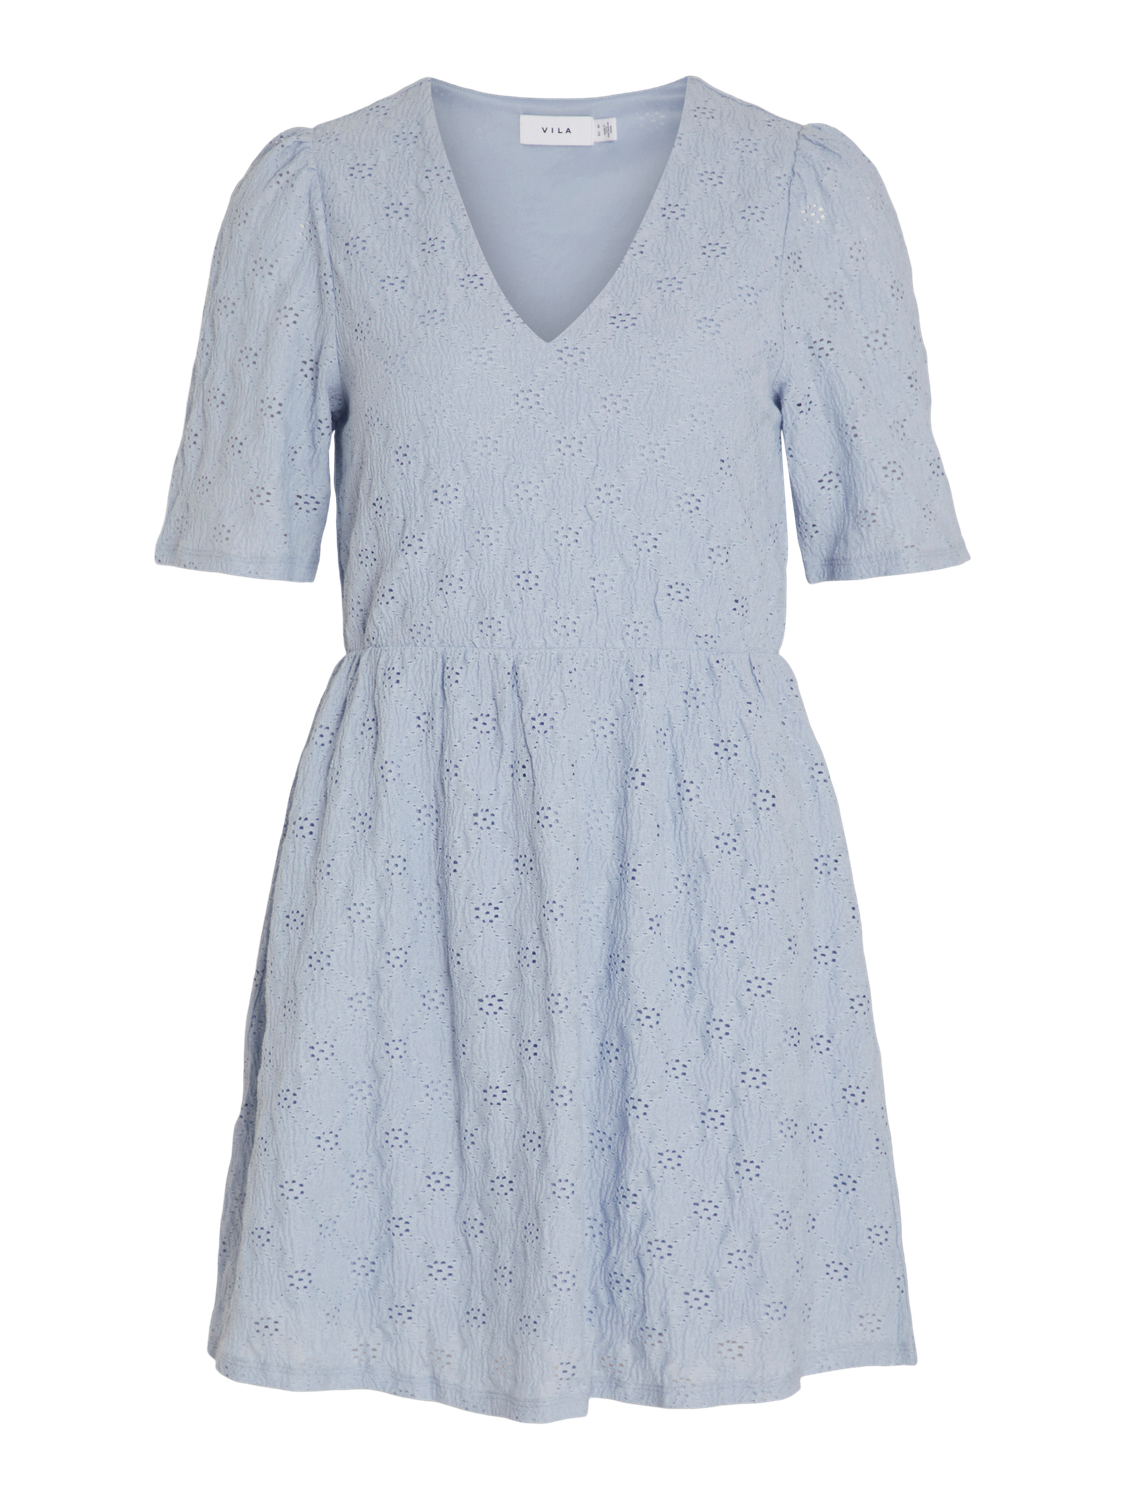 VIMELANIE Dress - Kentucky Blue